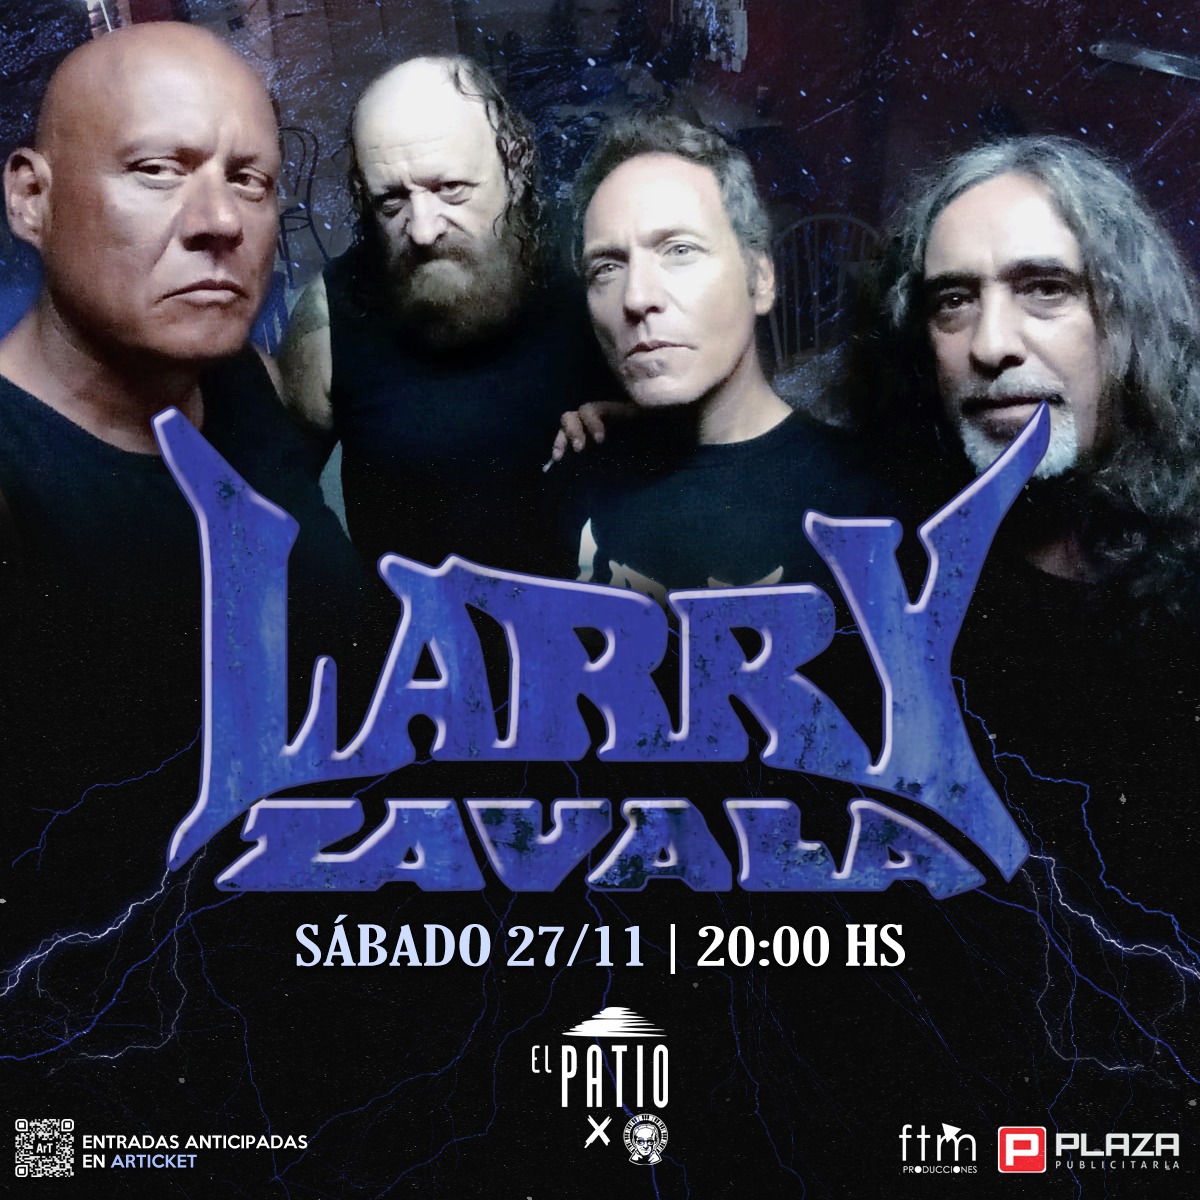 El metal vuelve a Mar del Plata de la mano de Larry Zavala